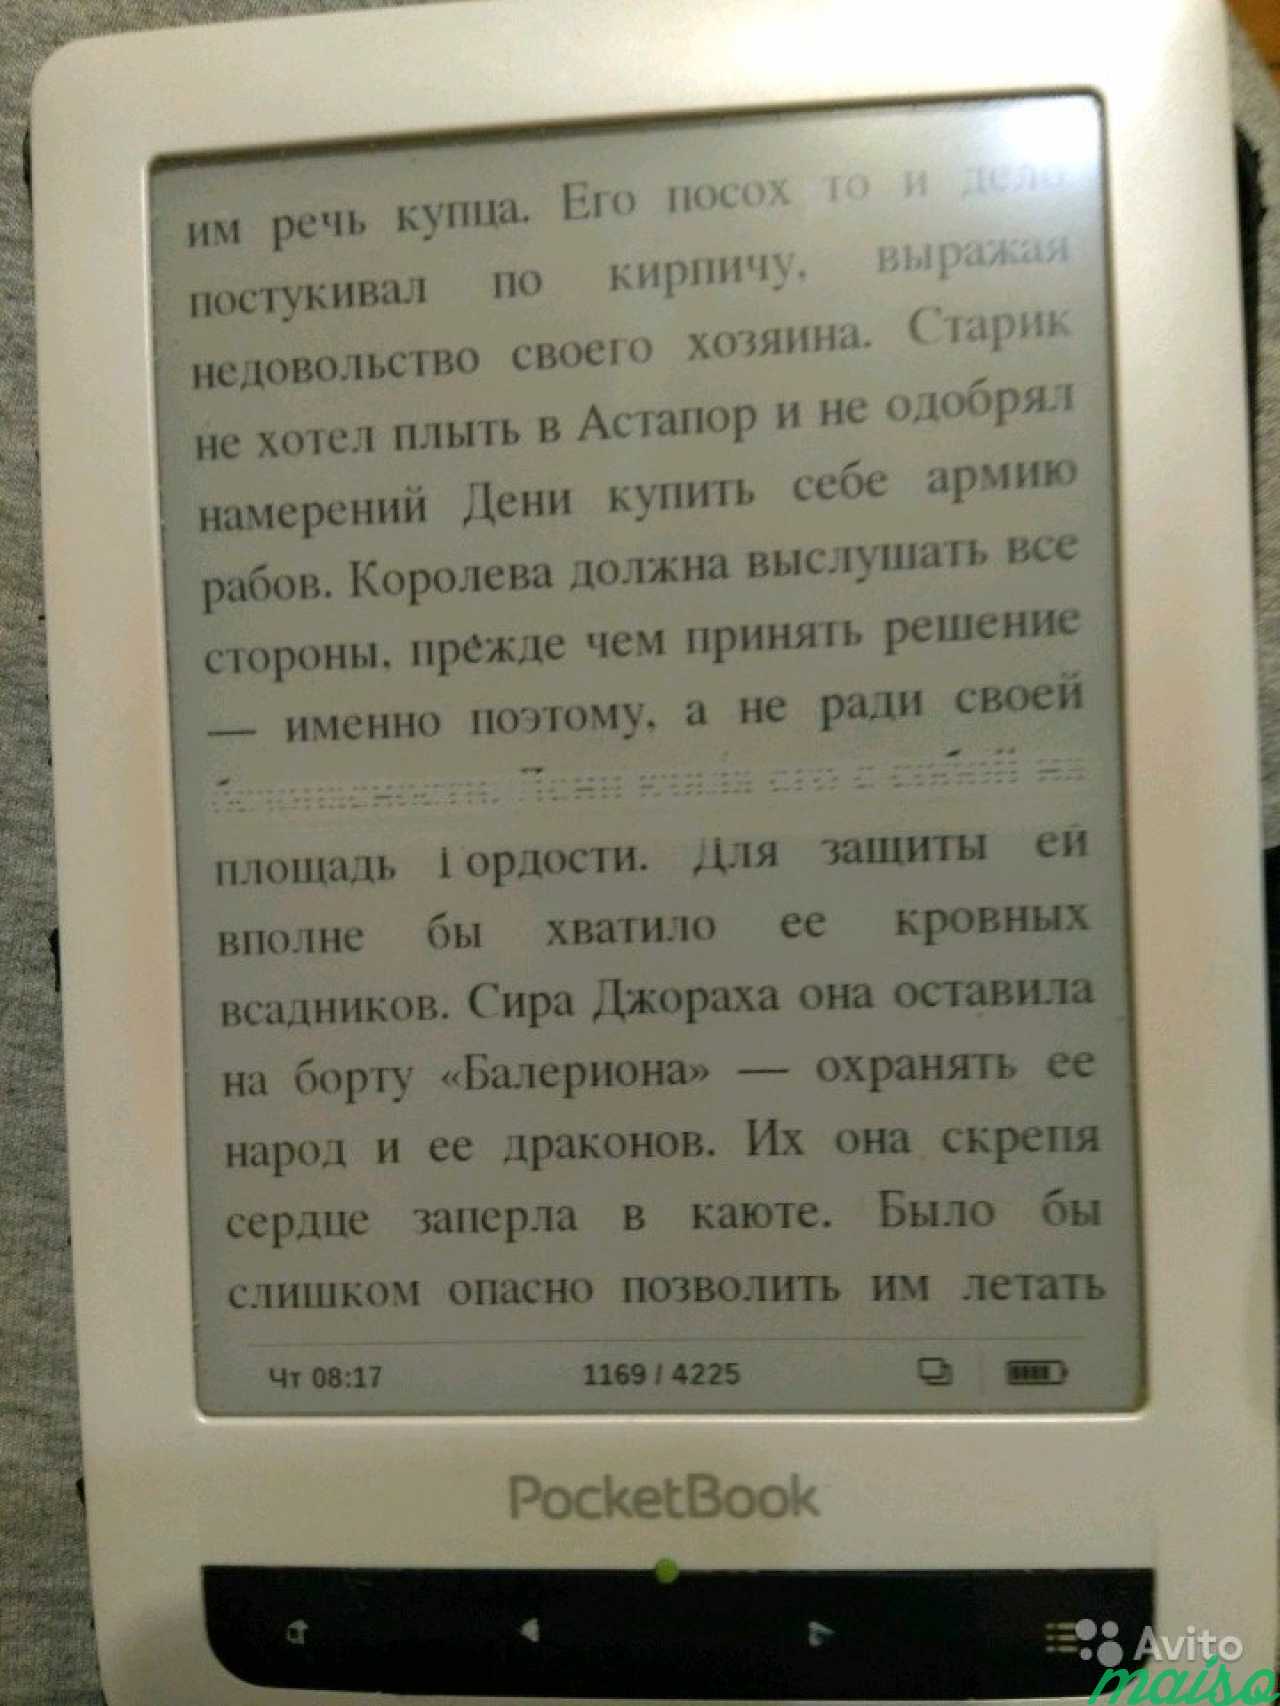 Pocket book 622 Touch в Санкт-Петербурге. Фото 1